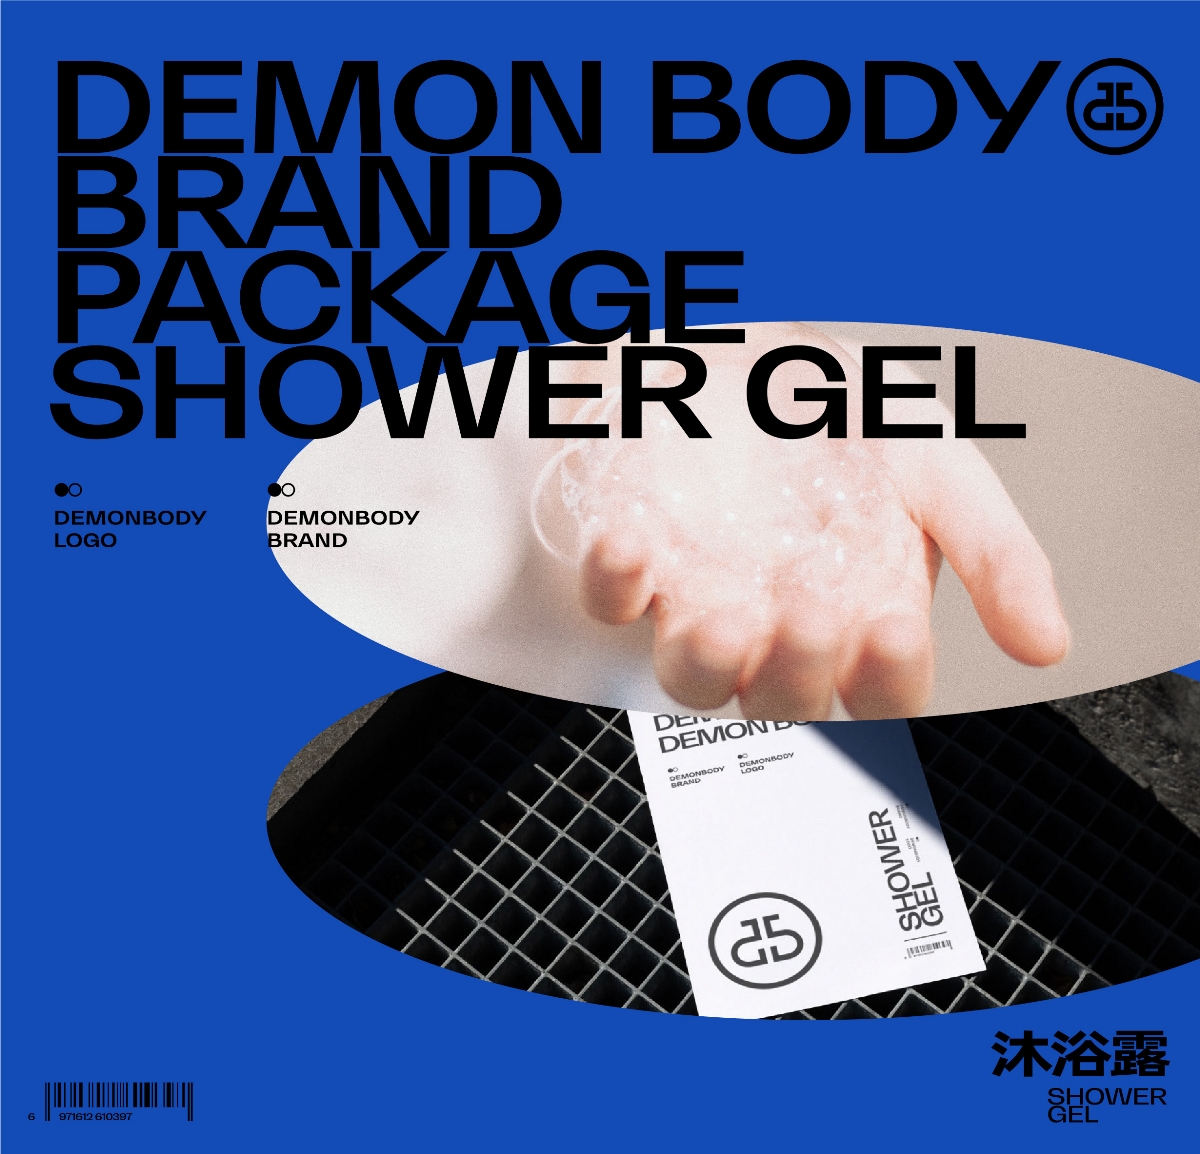 Demonbody沐浴露品牌包装设计